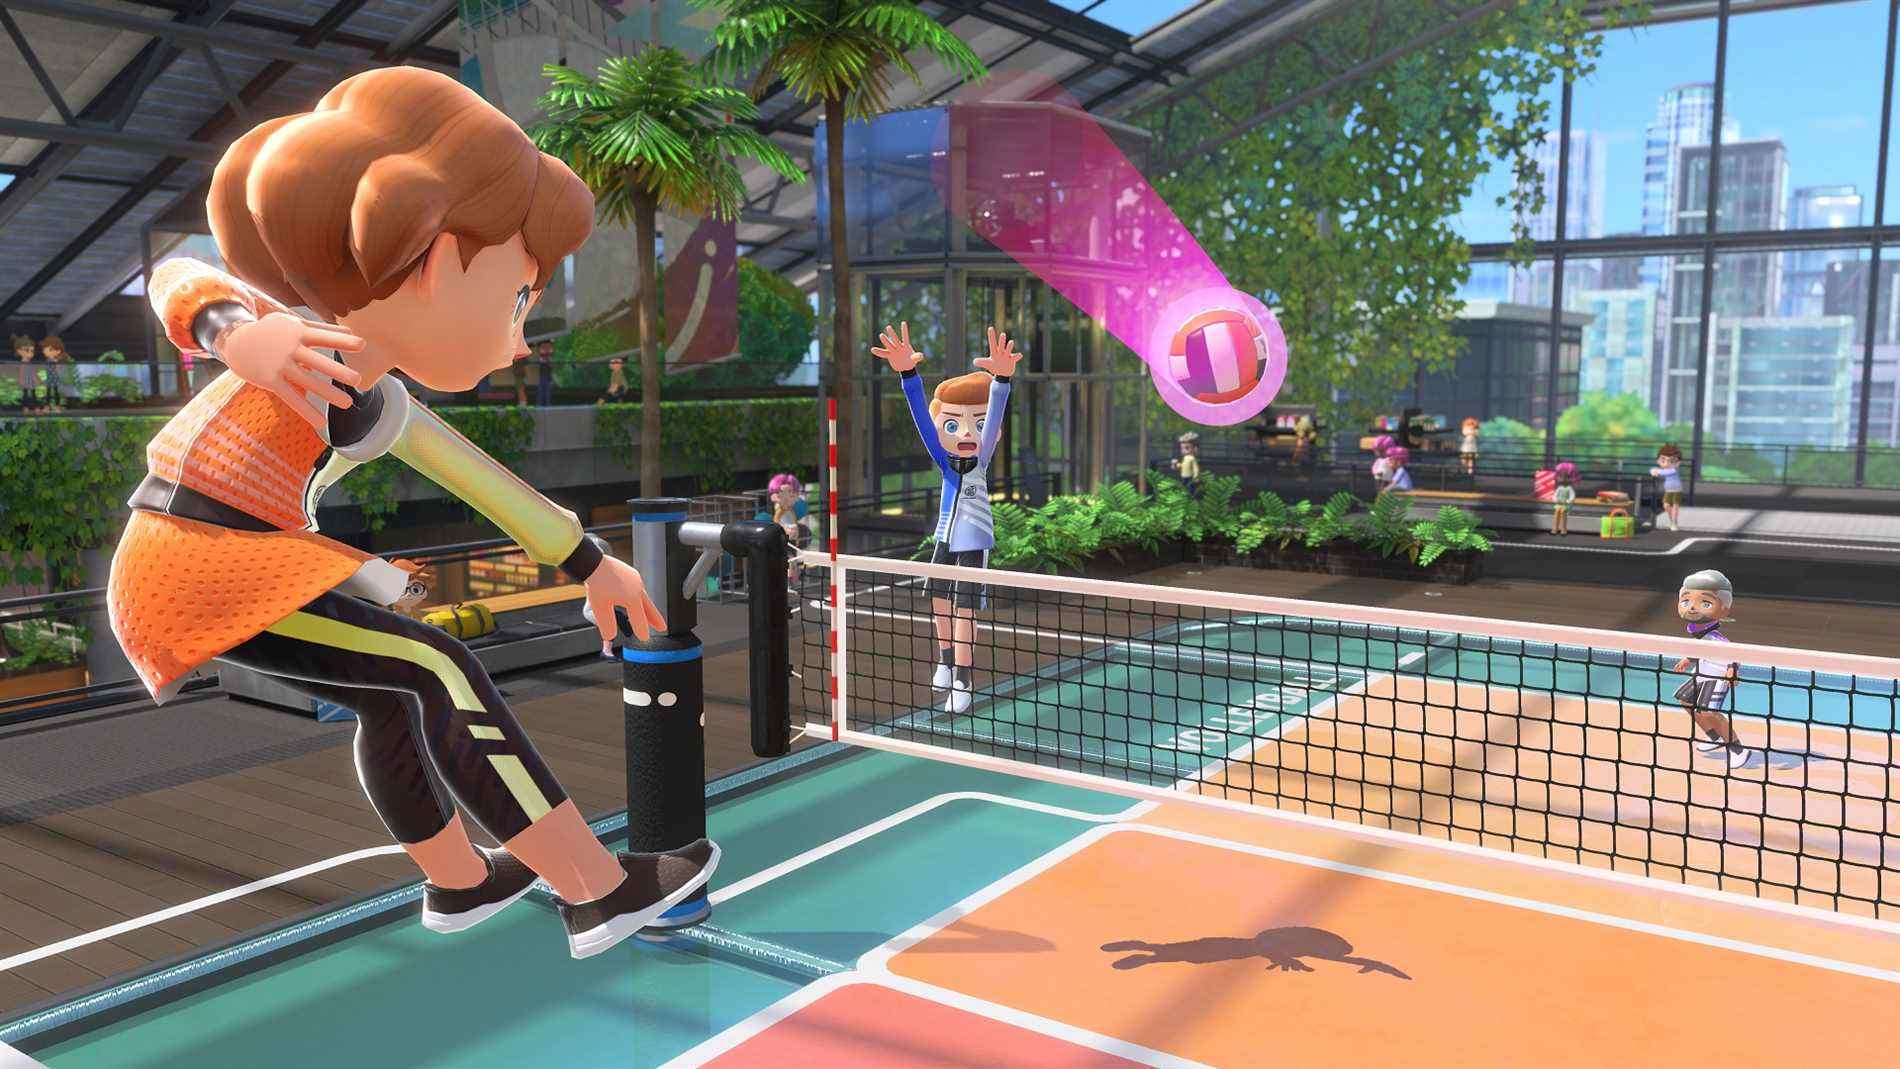 Jouer au volley-ball dans Nintendo Switch Sports